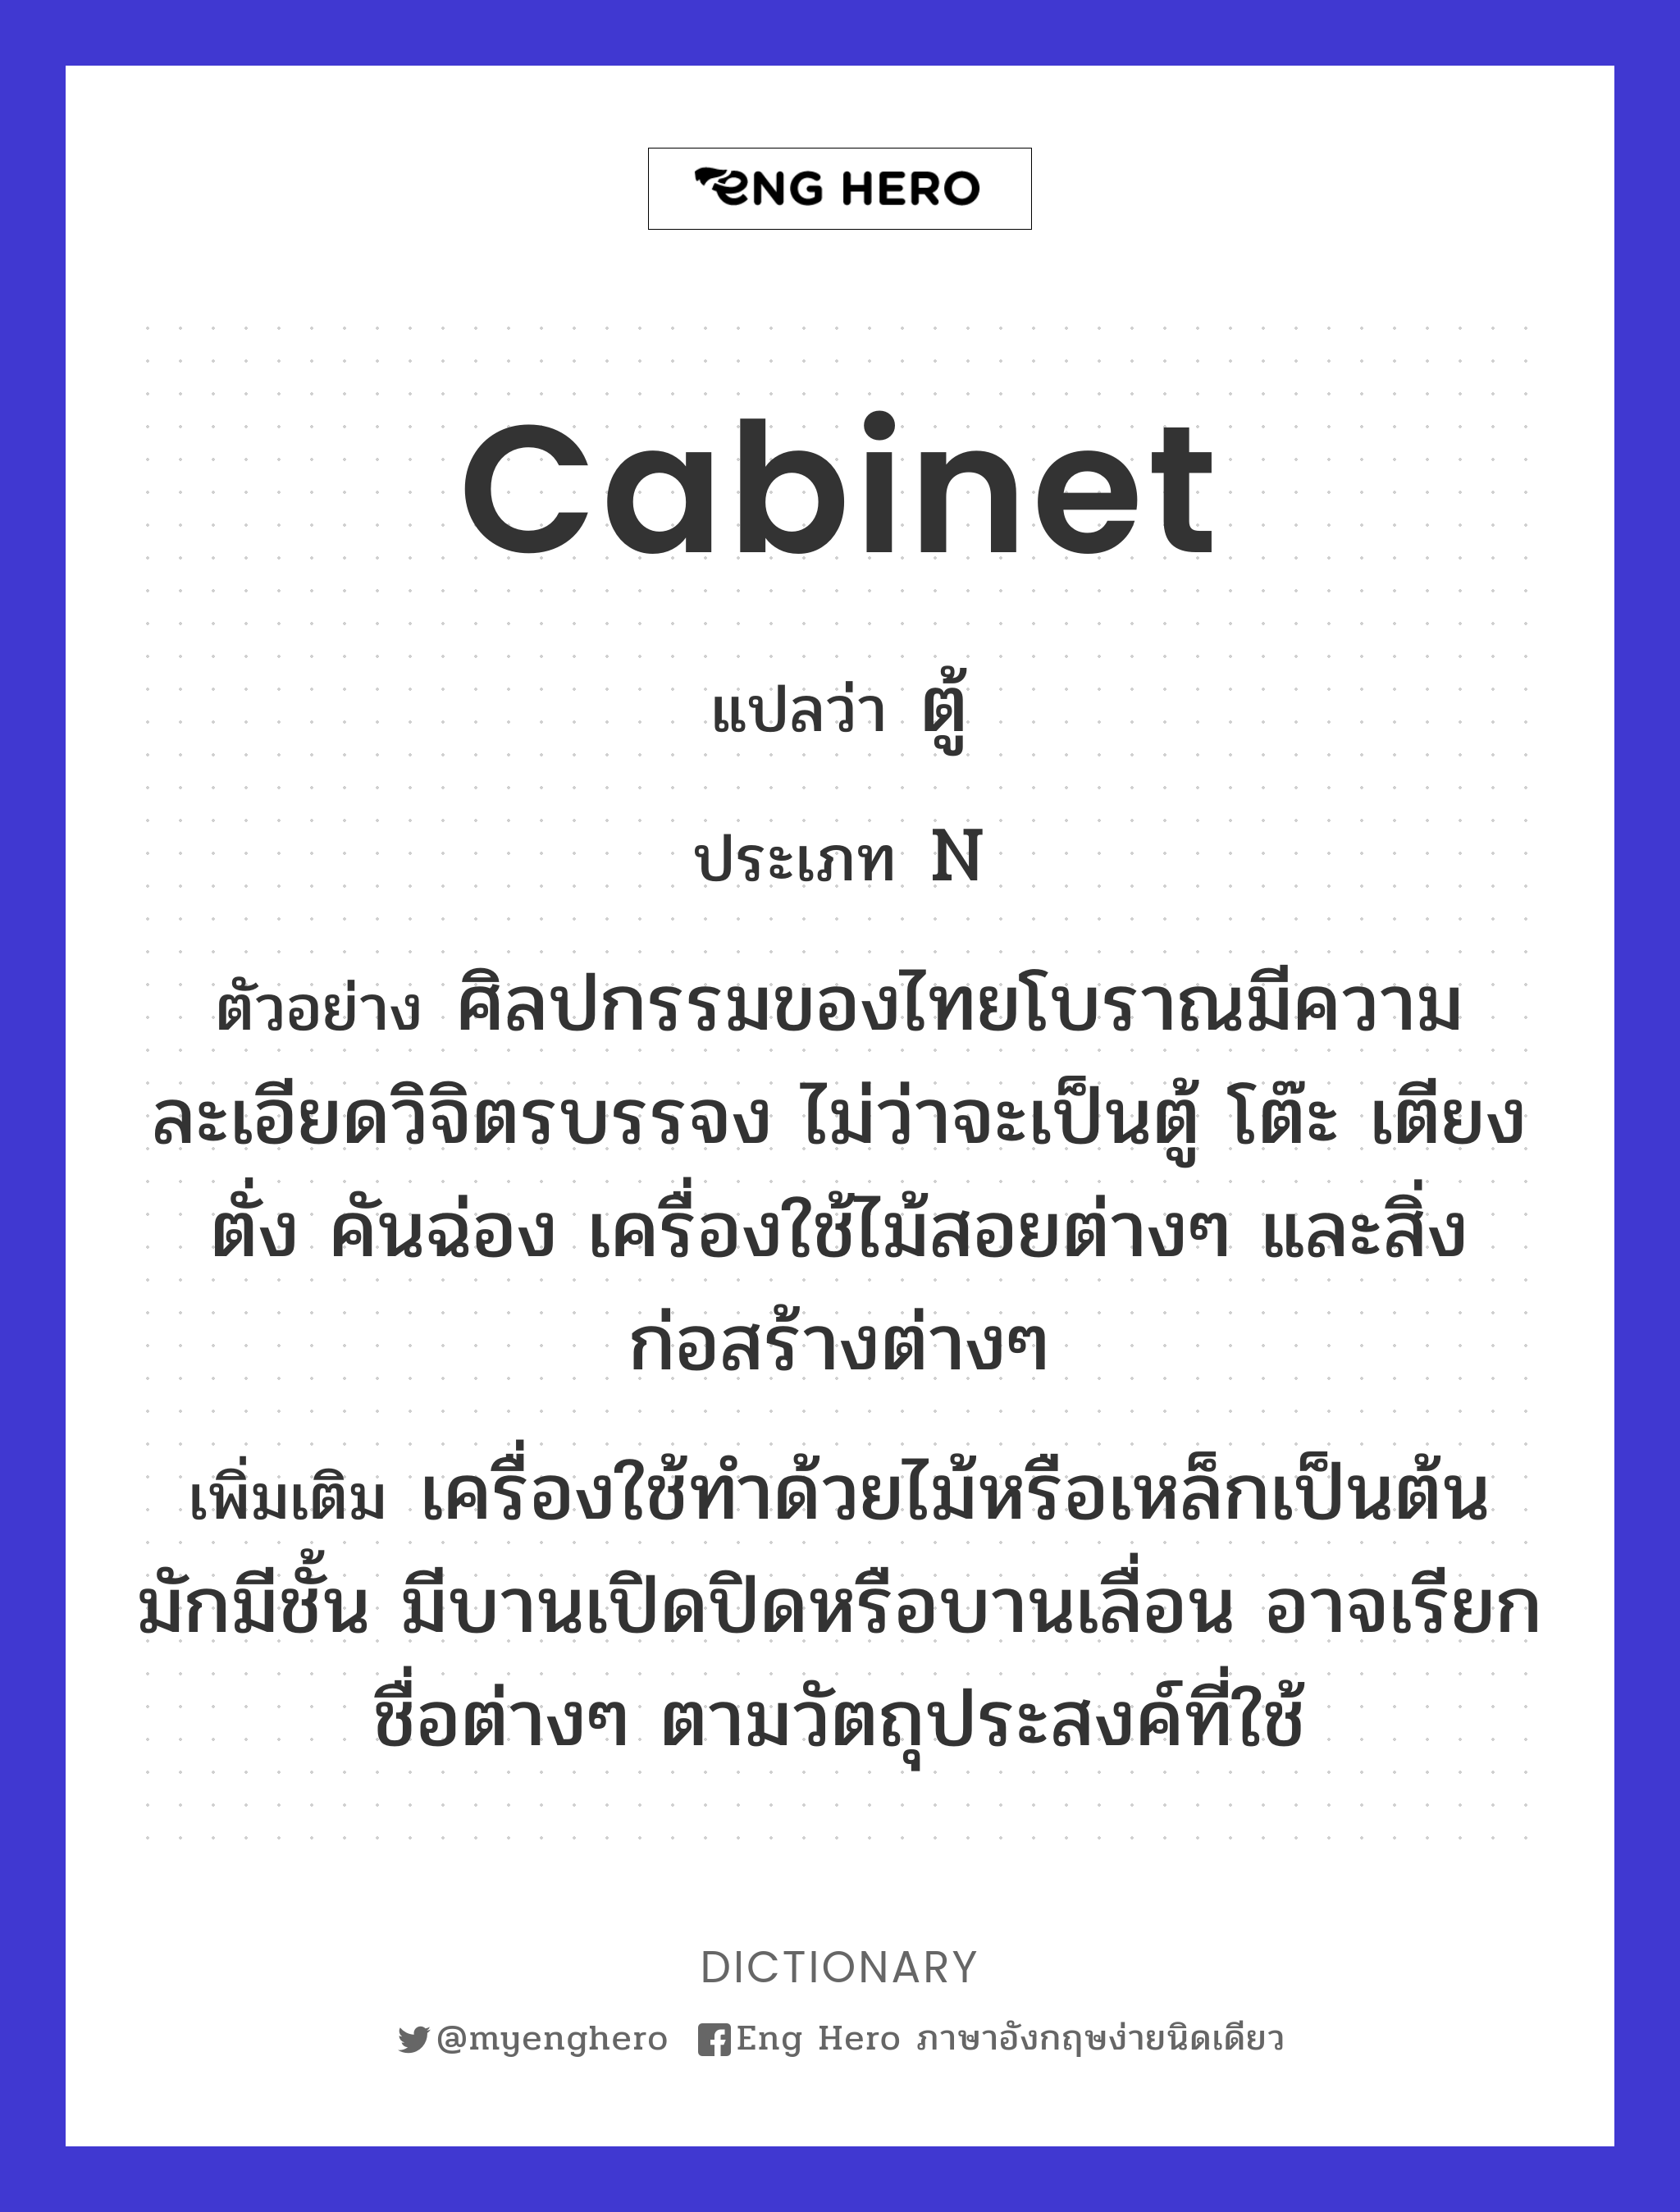 cabinet